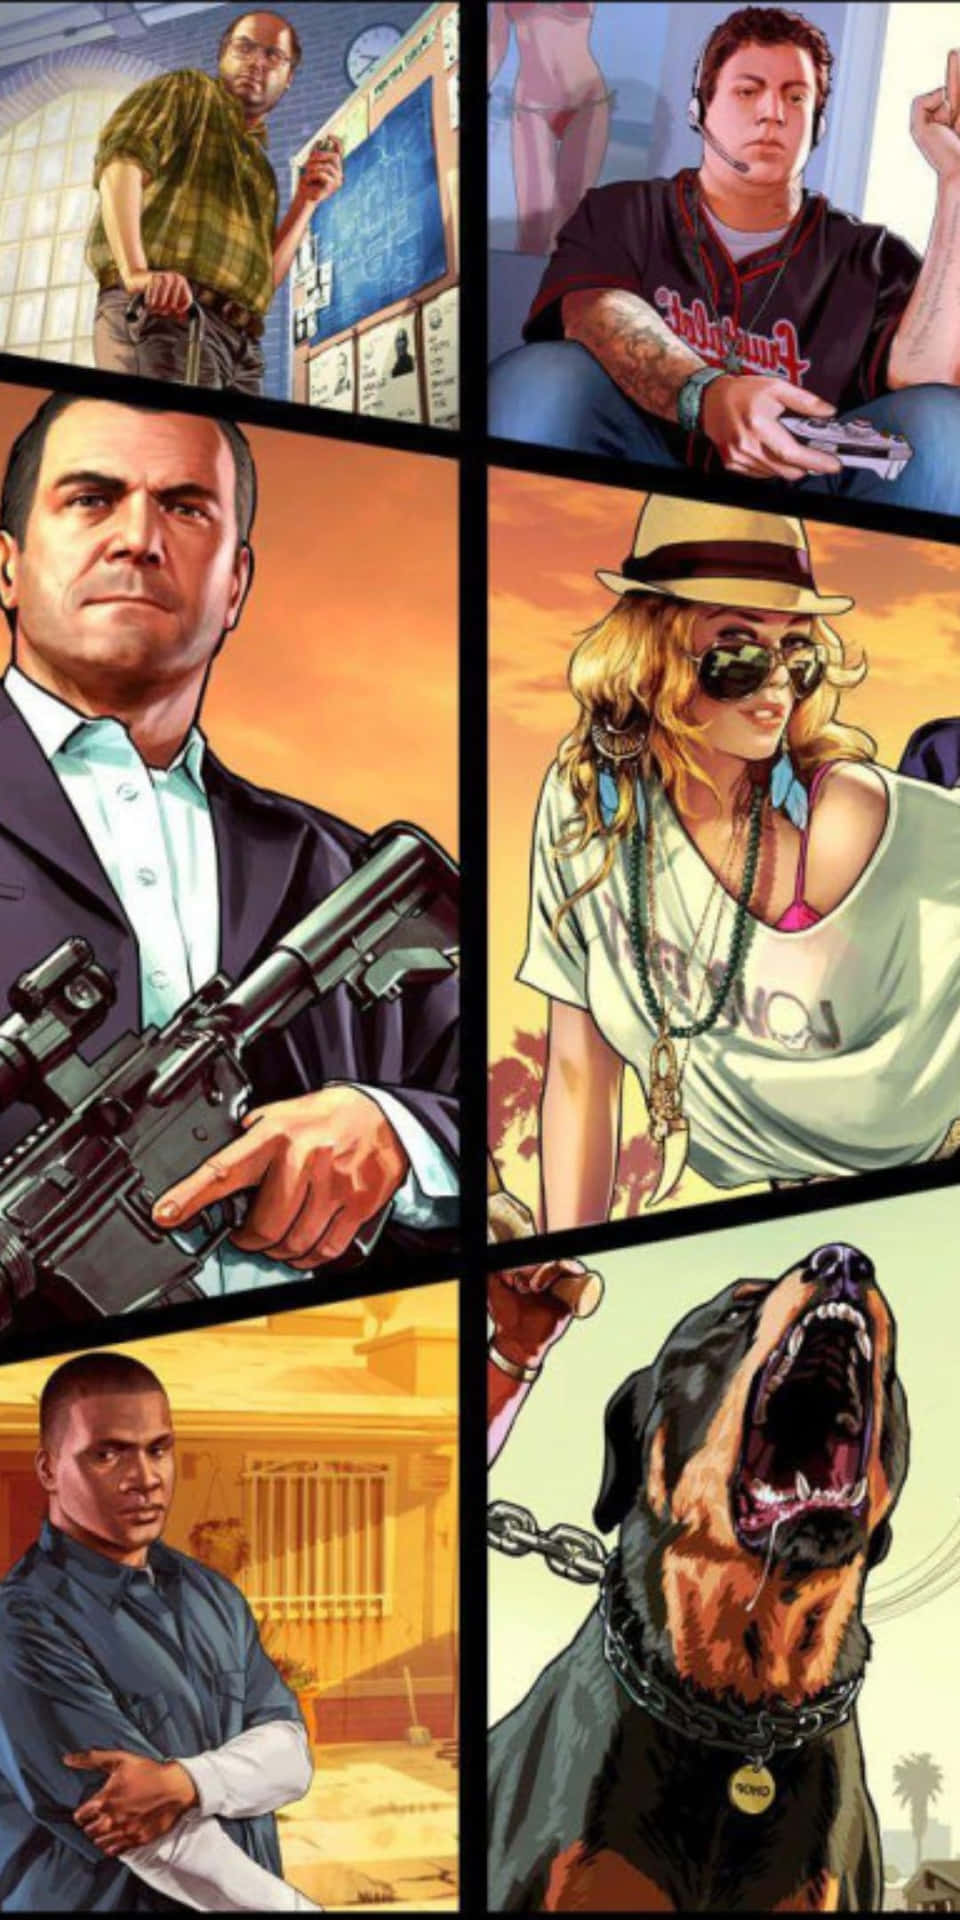 Pixel 3 Grand Theft Auto V Background